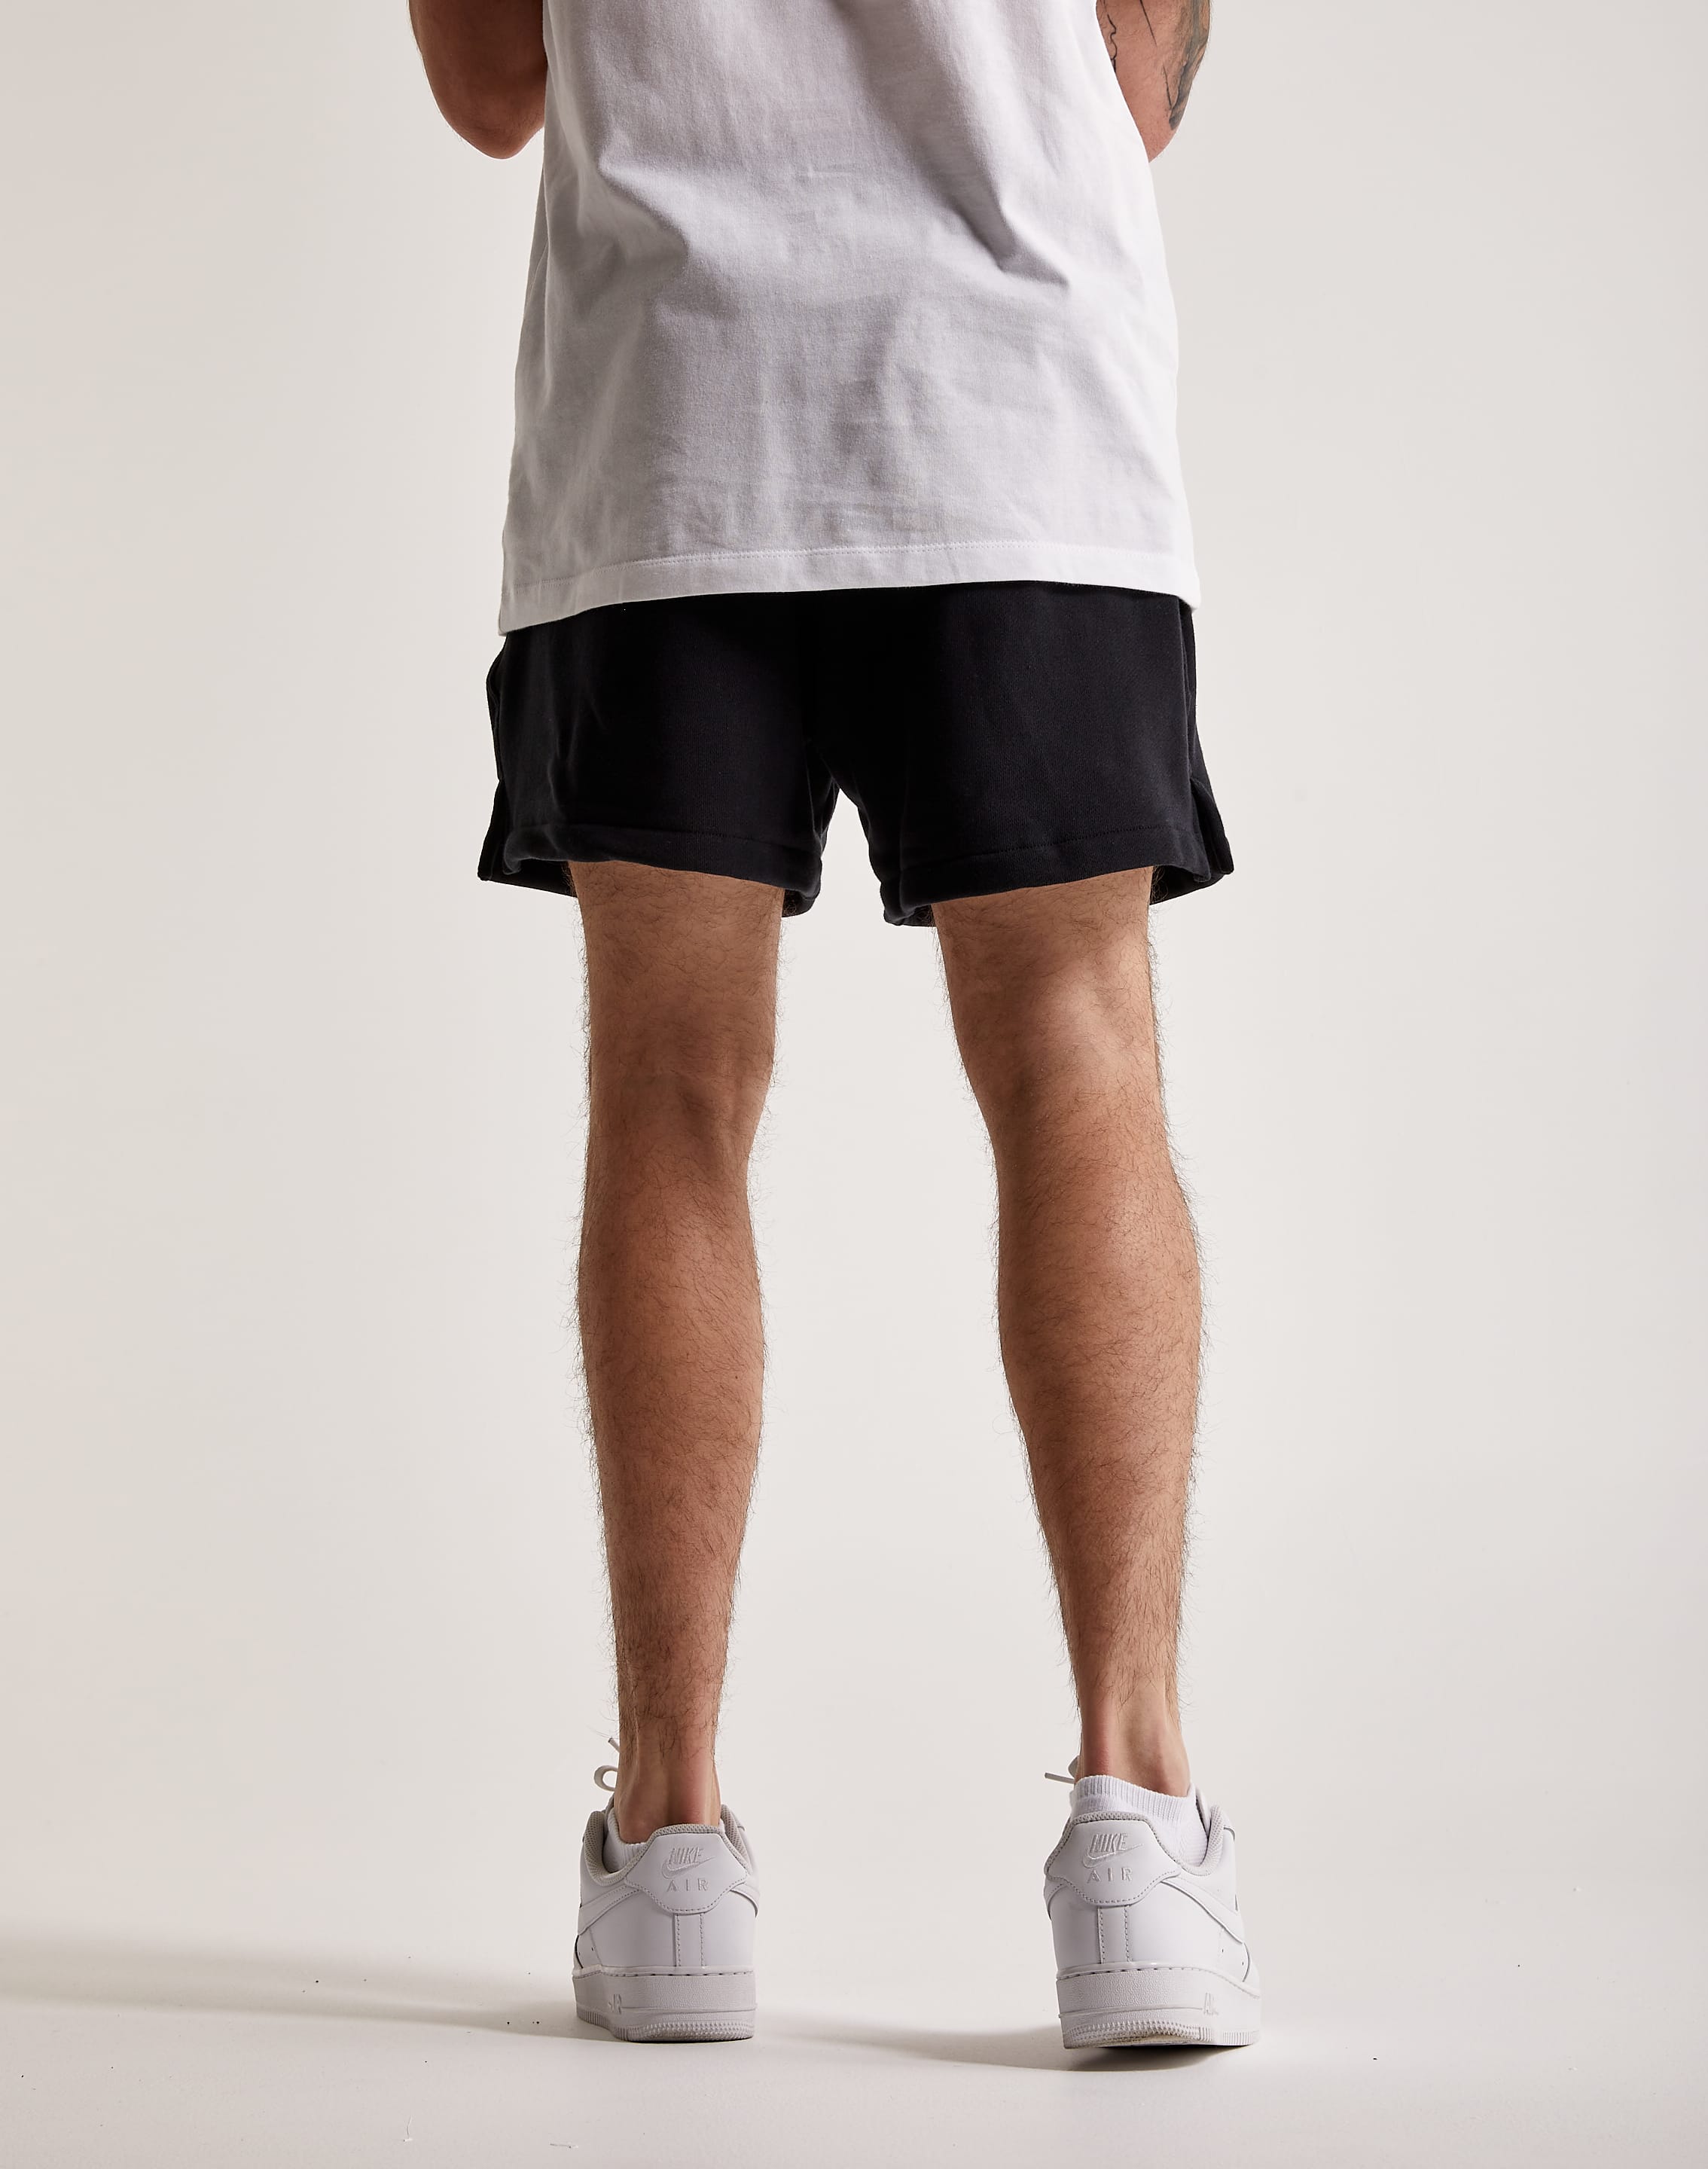 Nike Sportswear Men's Heritage Essentials Shorts Shorts DC1877 084 Gray 2XL  | eBay